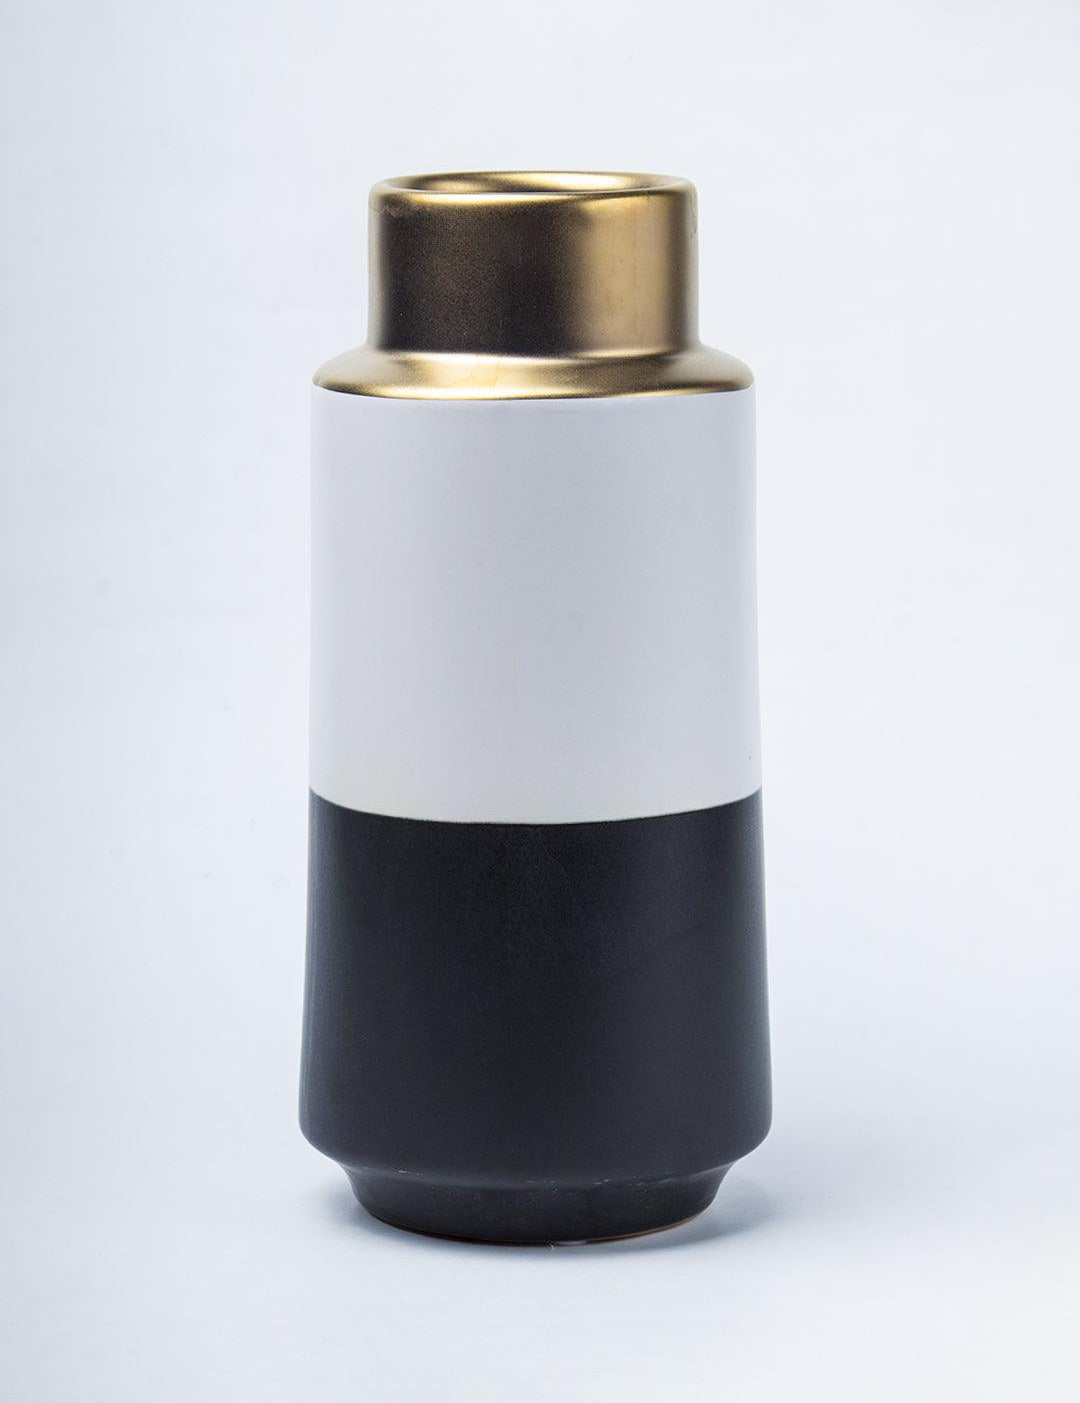 Stylish Ceramic Vase - Golden, White & Black, Contemporary Design - 2